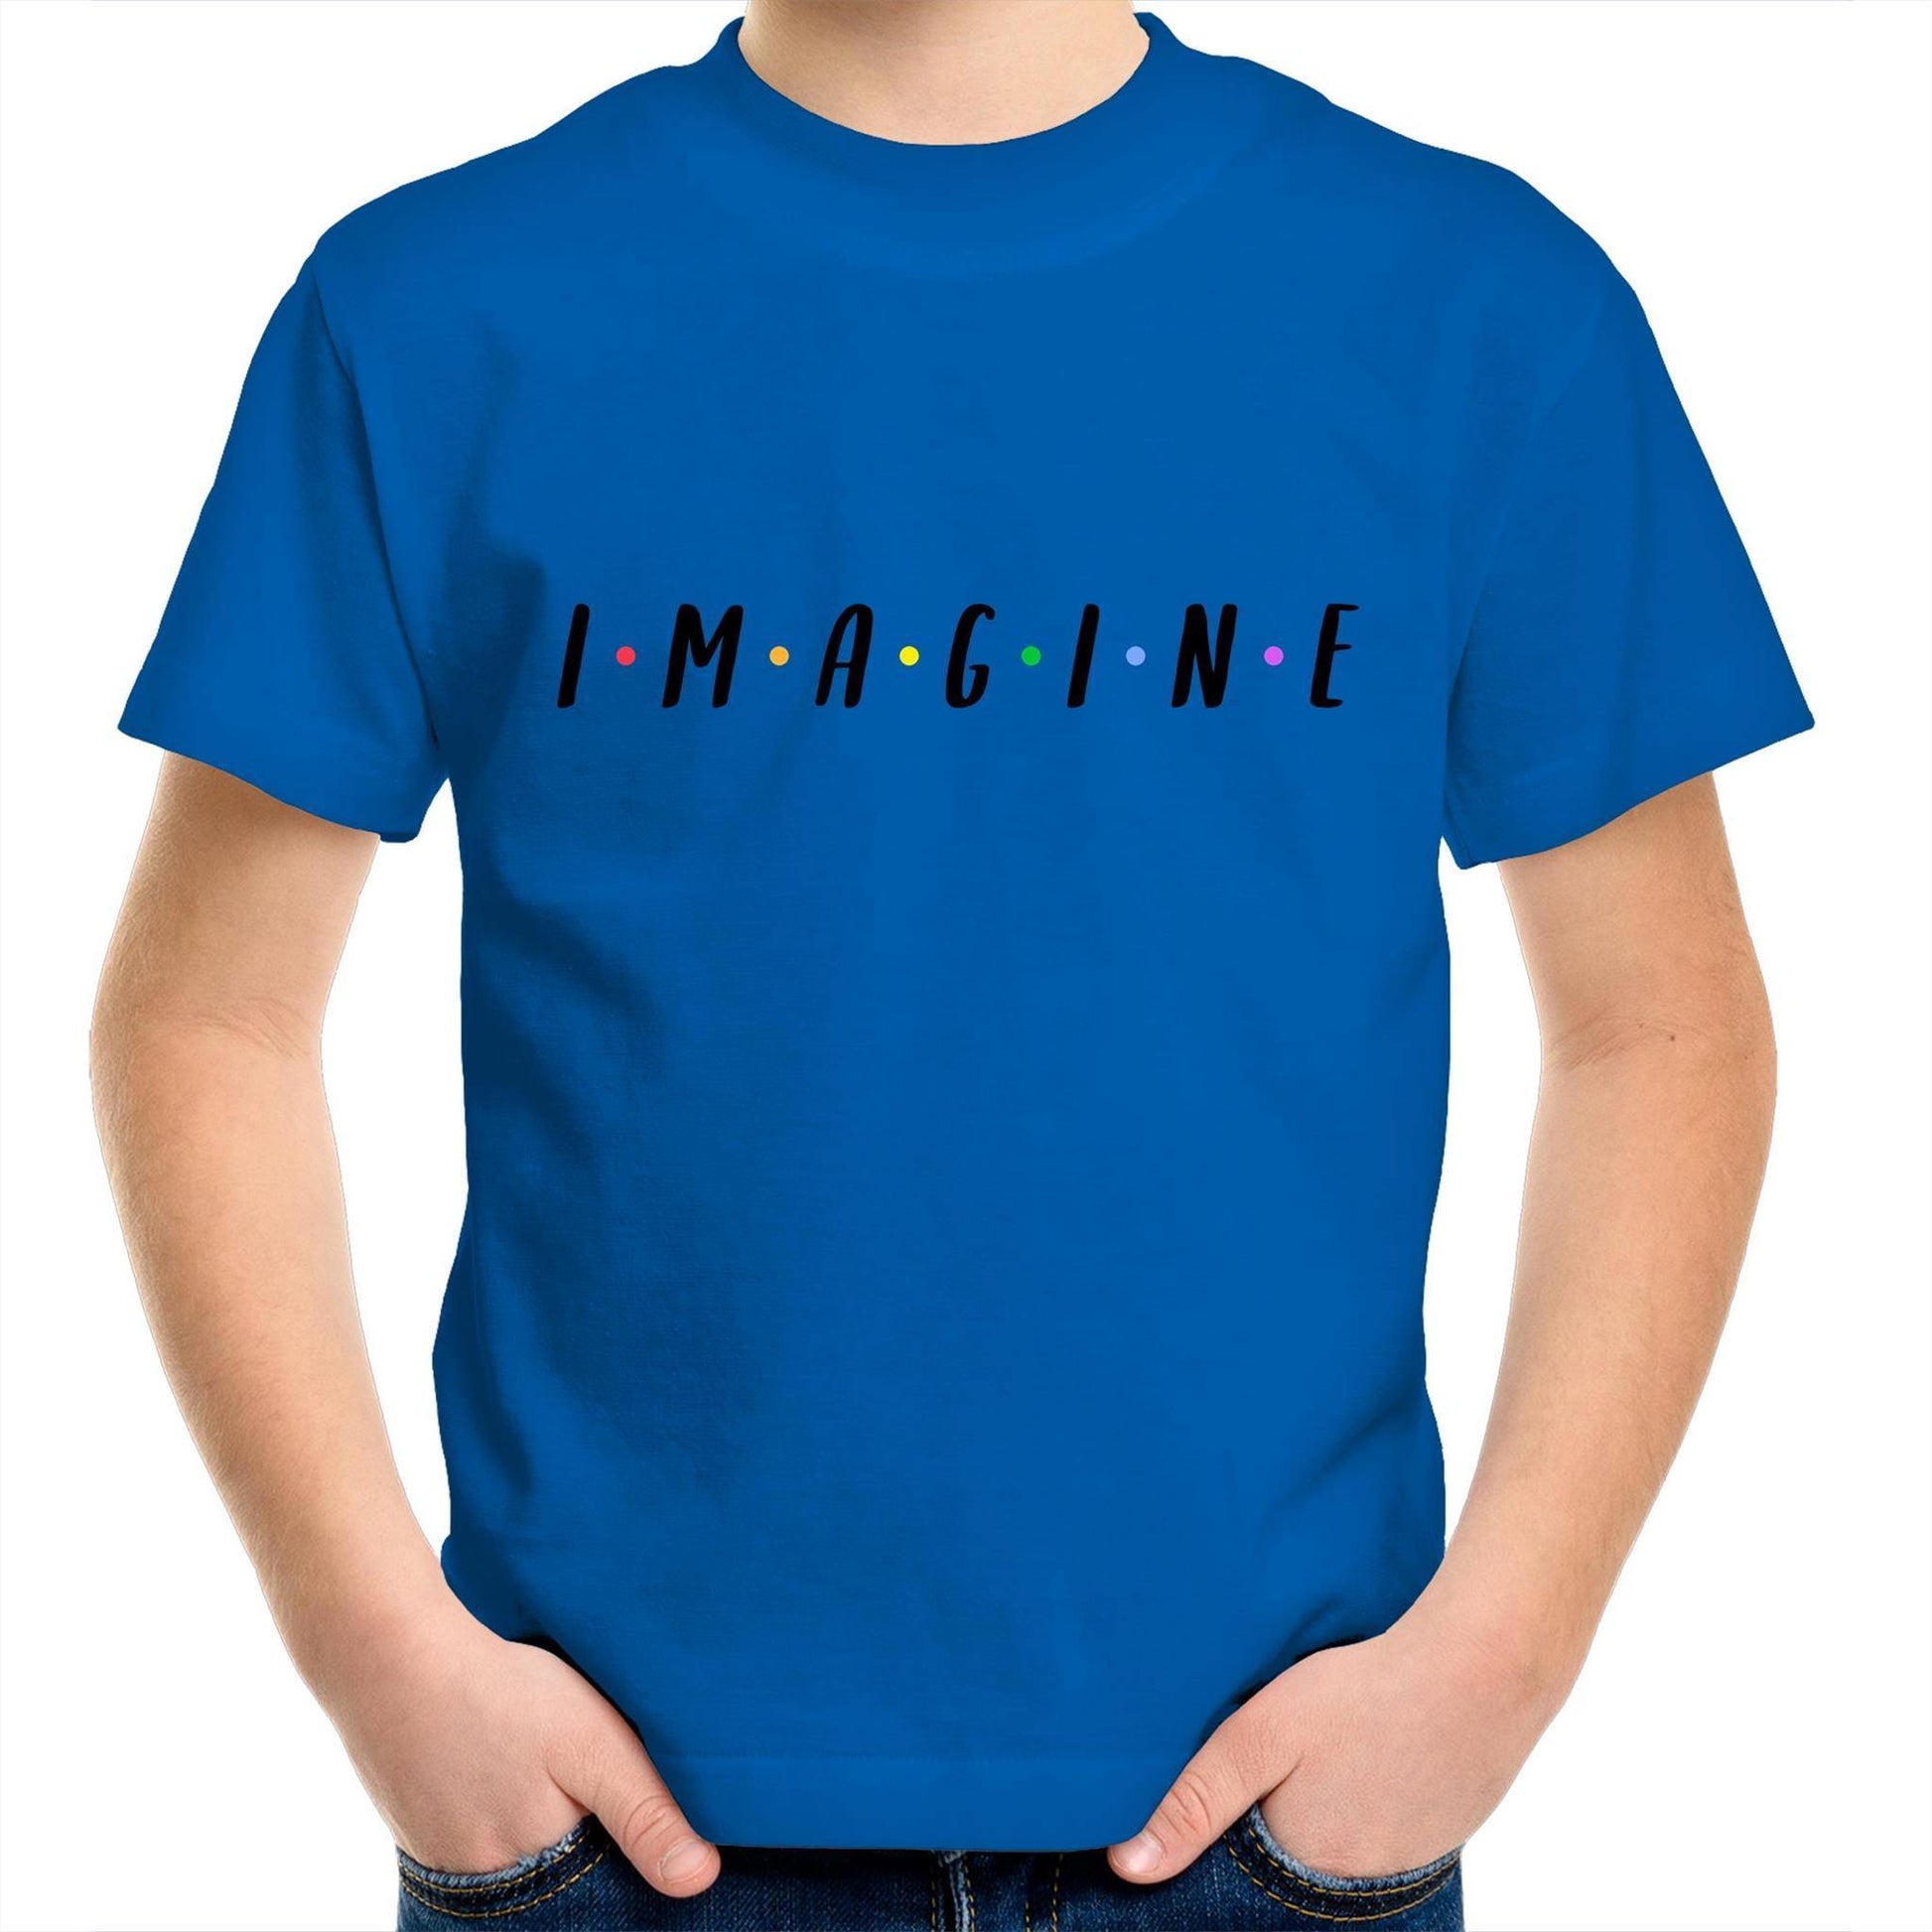 Imagine - Kids Youth Crew T-Shirt Bright Royal Kids Youth T-shirt